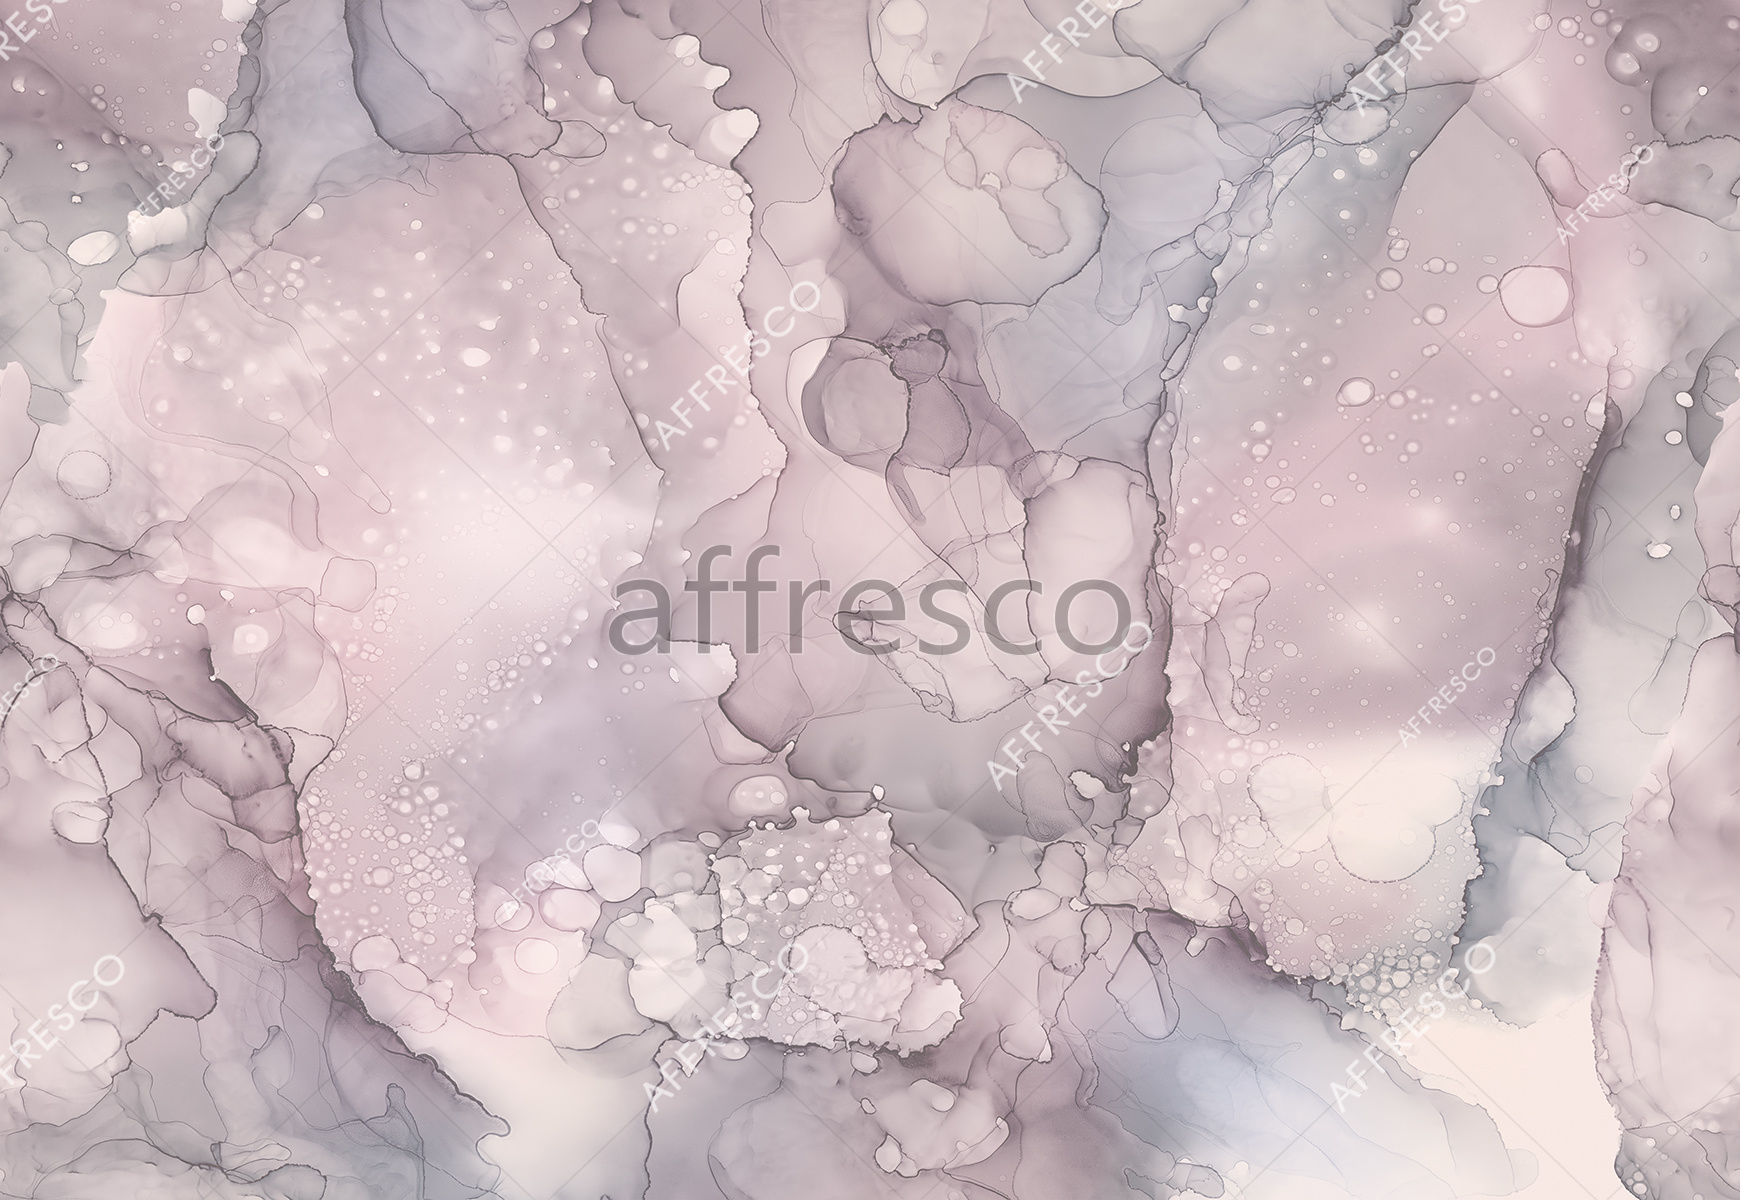 ID138797 | Textures |  | Affresco Factory